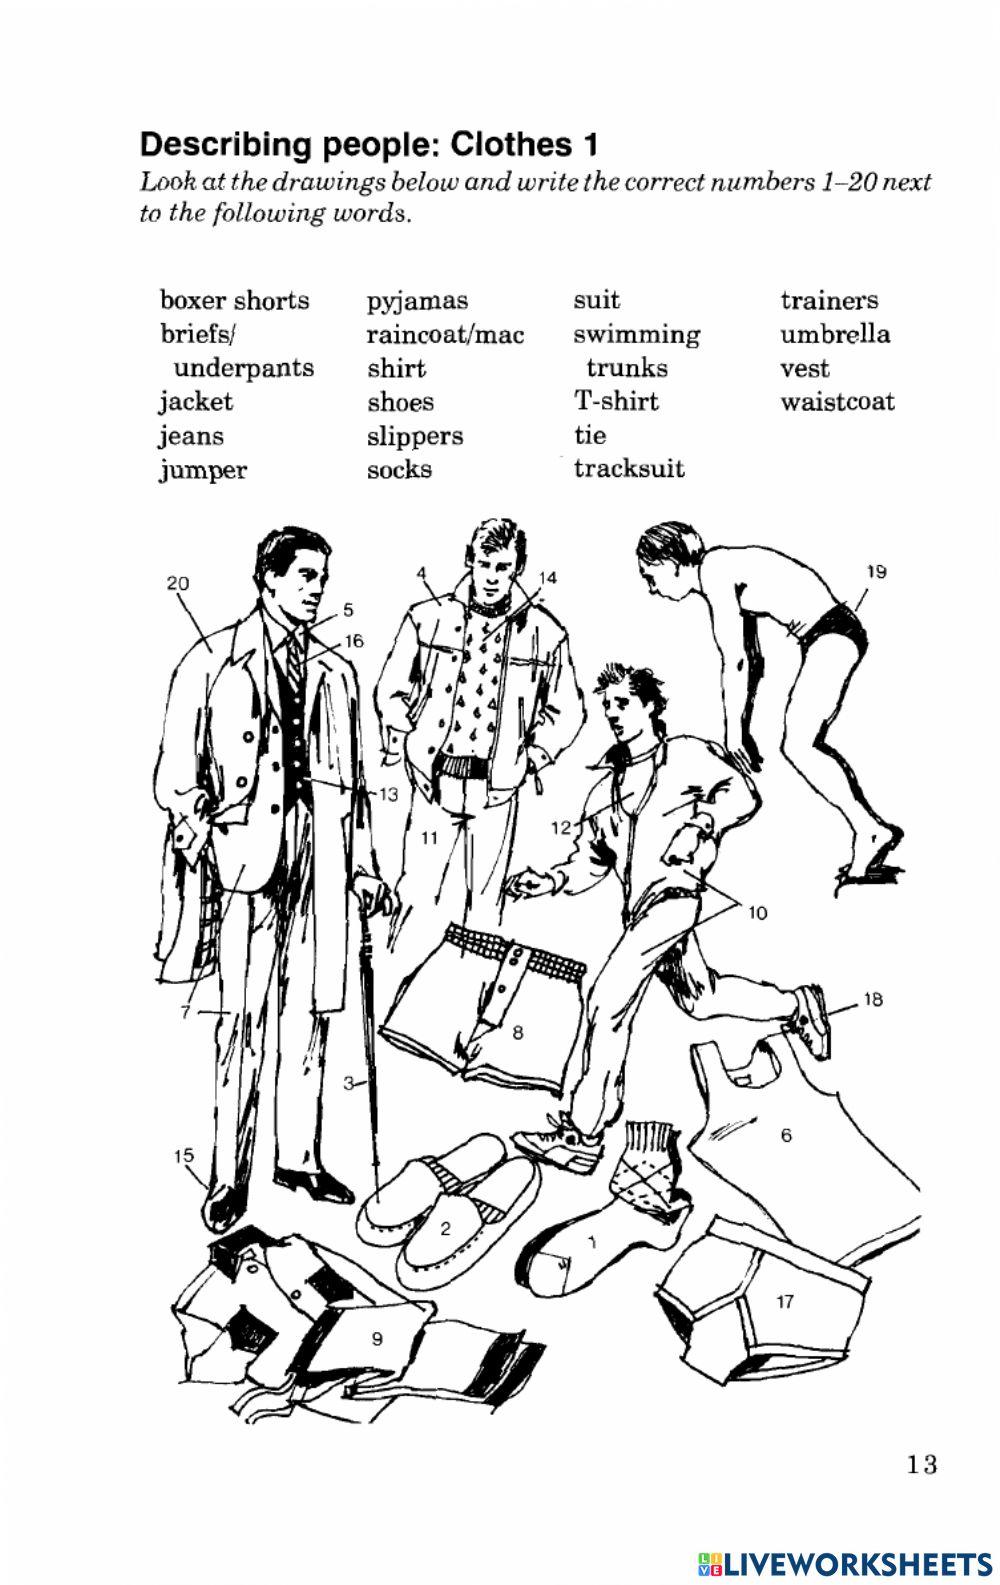 Describing people: clothes 1 worksheet